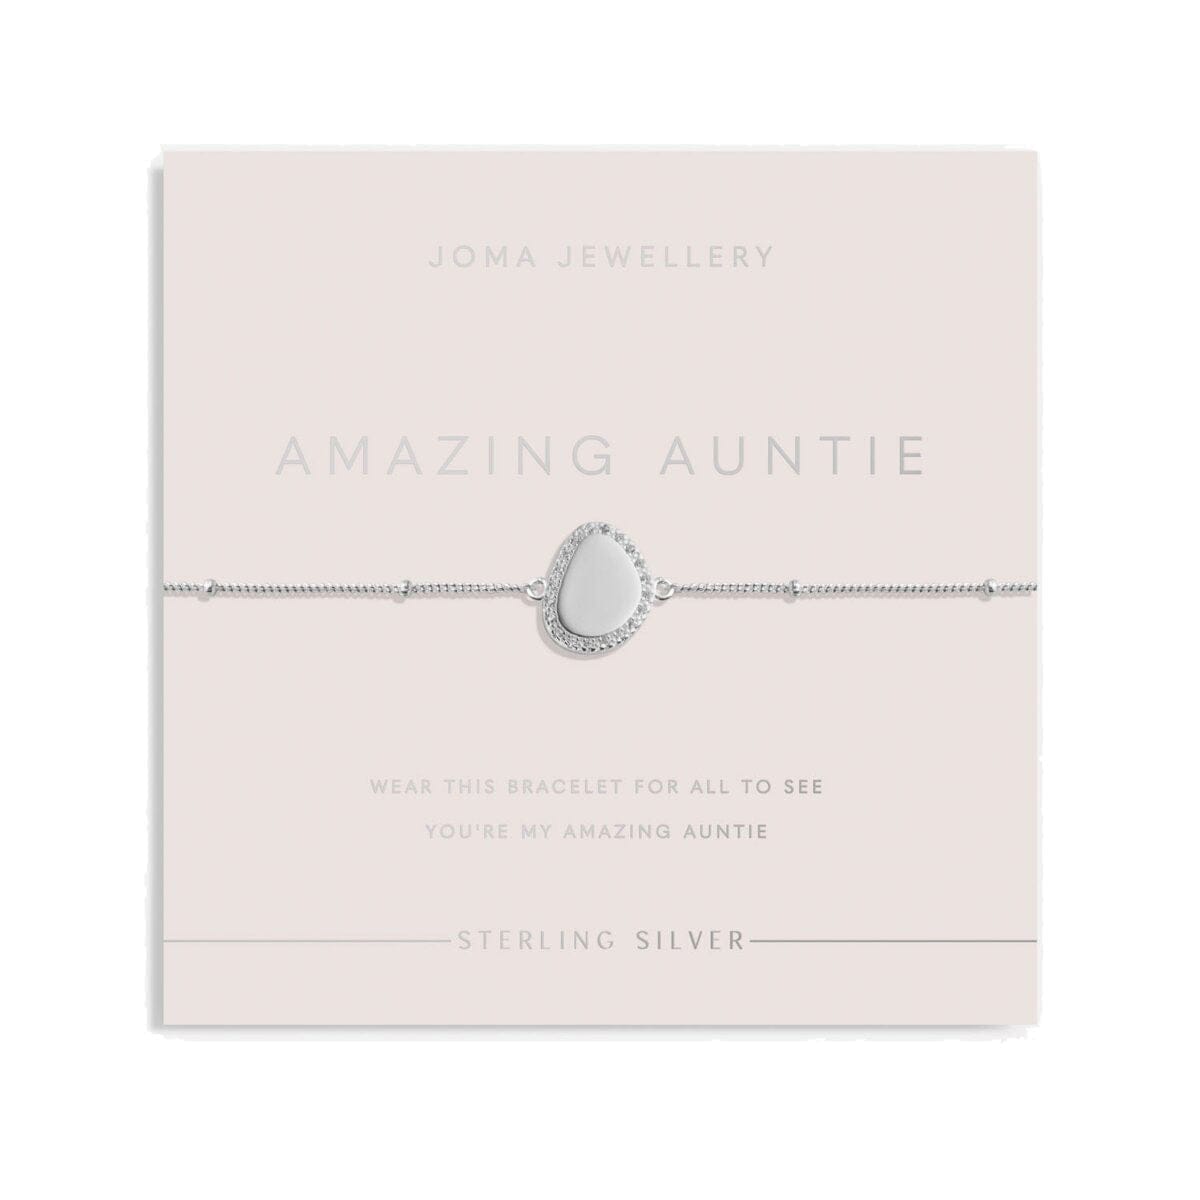 Joma Jewellery Bracelet Joma Jewellery Sterling Silver Bracelet - Amazing Auntie